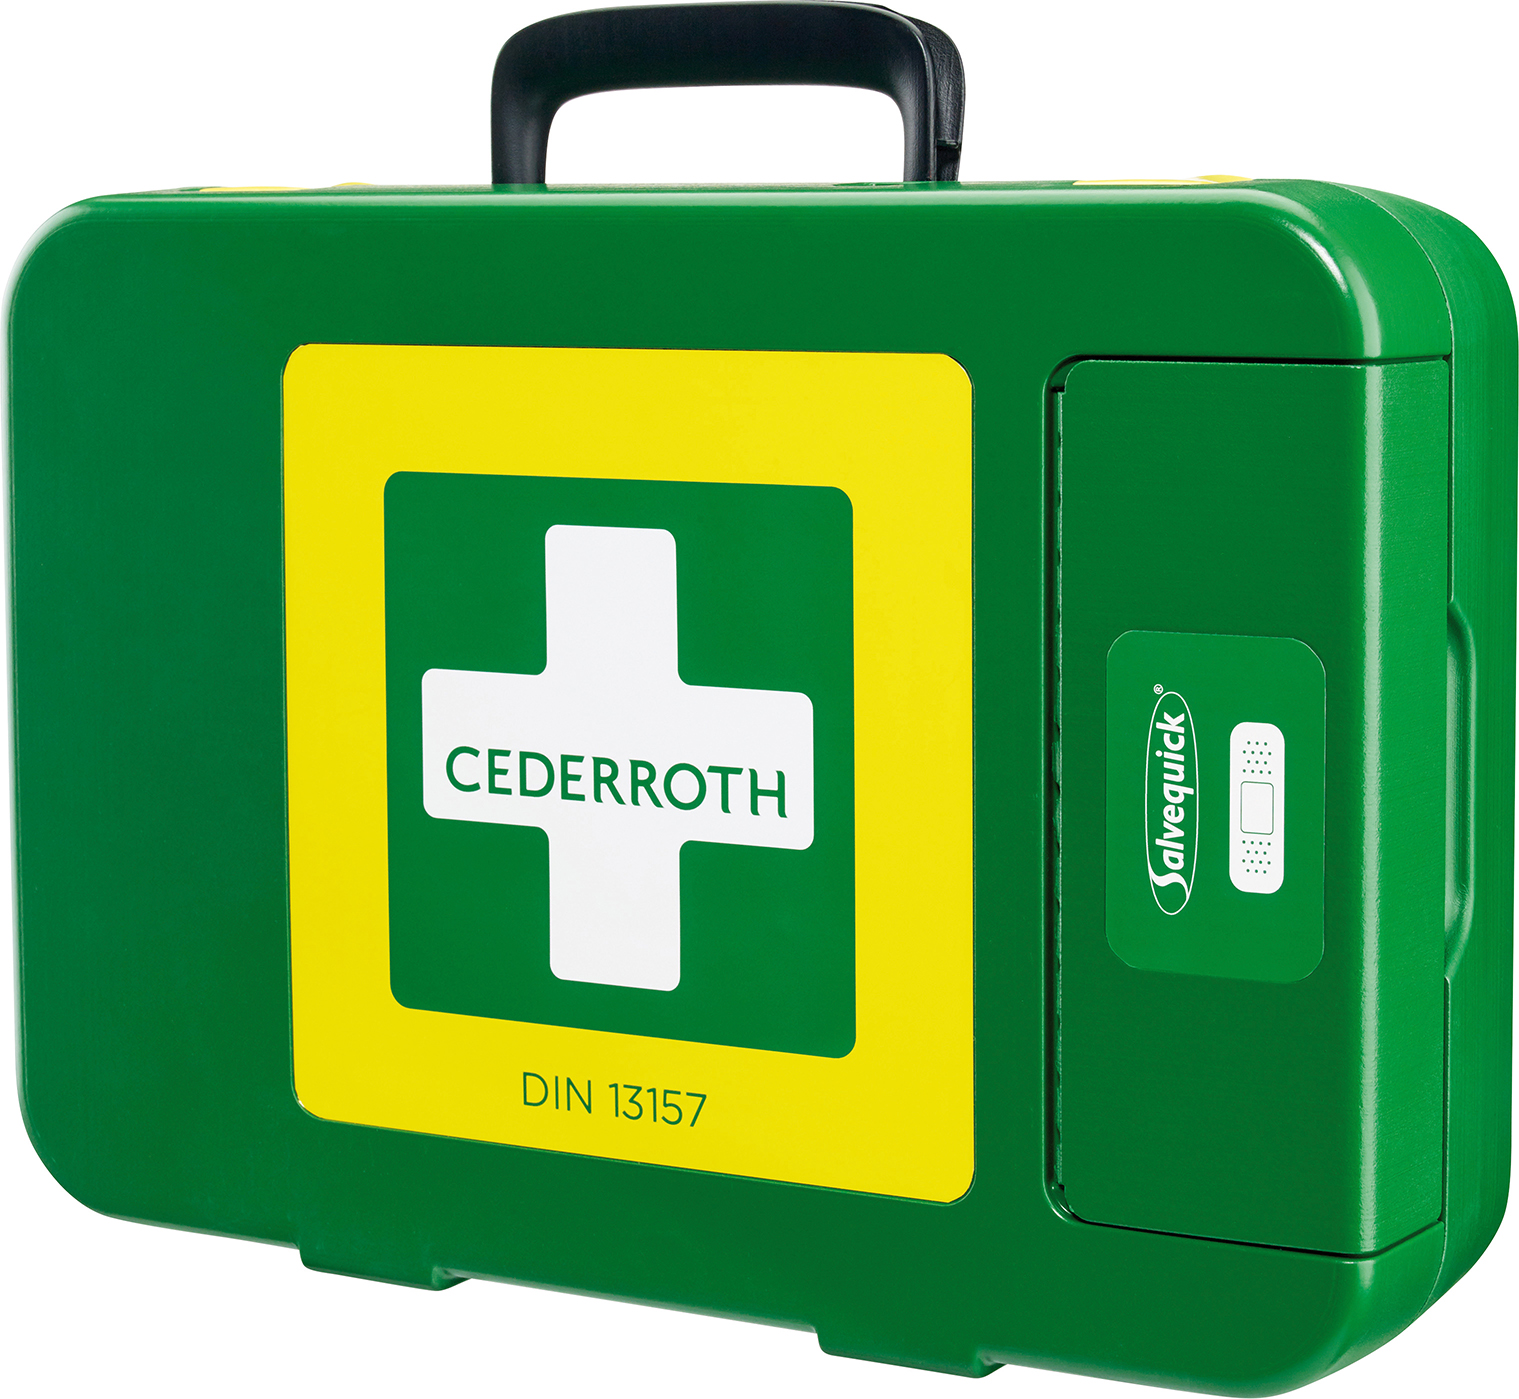 CEDERROTH First Aid Kit